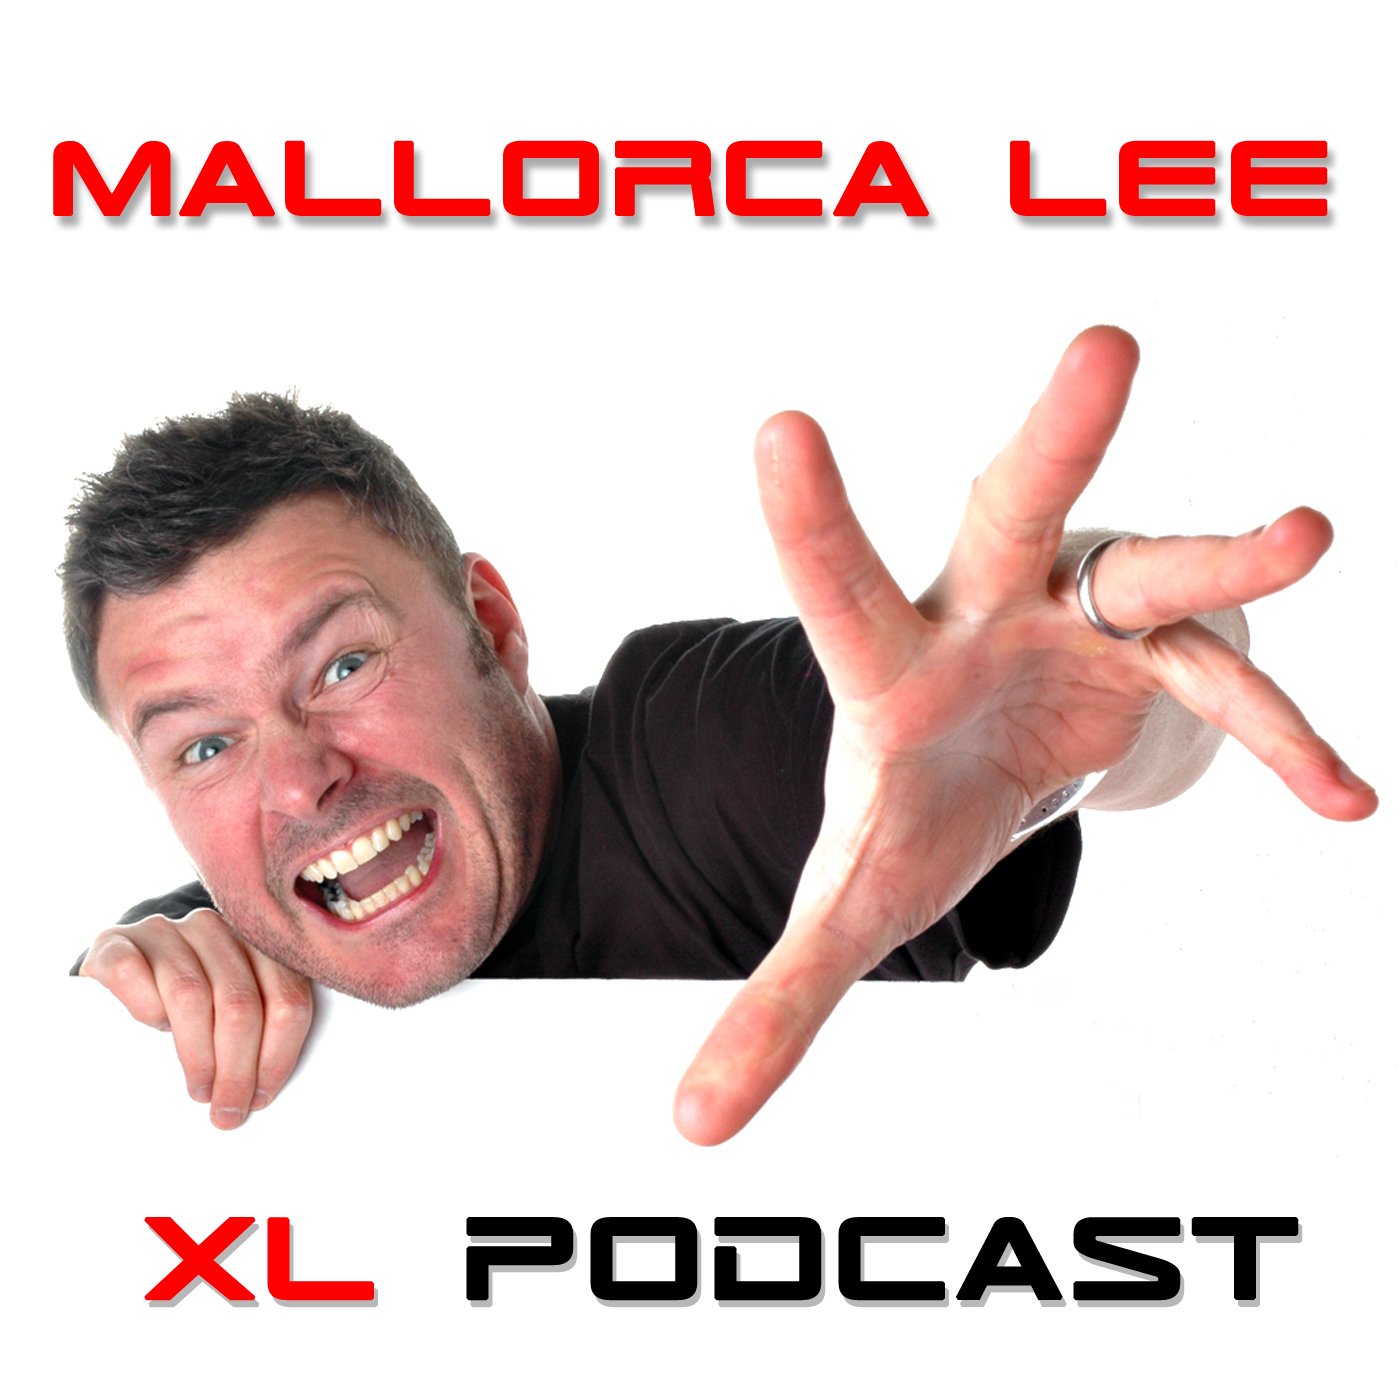 Mallorca Lee XL Podcast ep.77